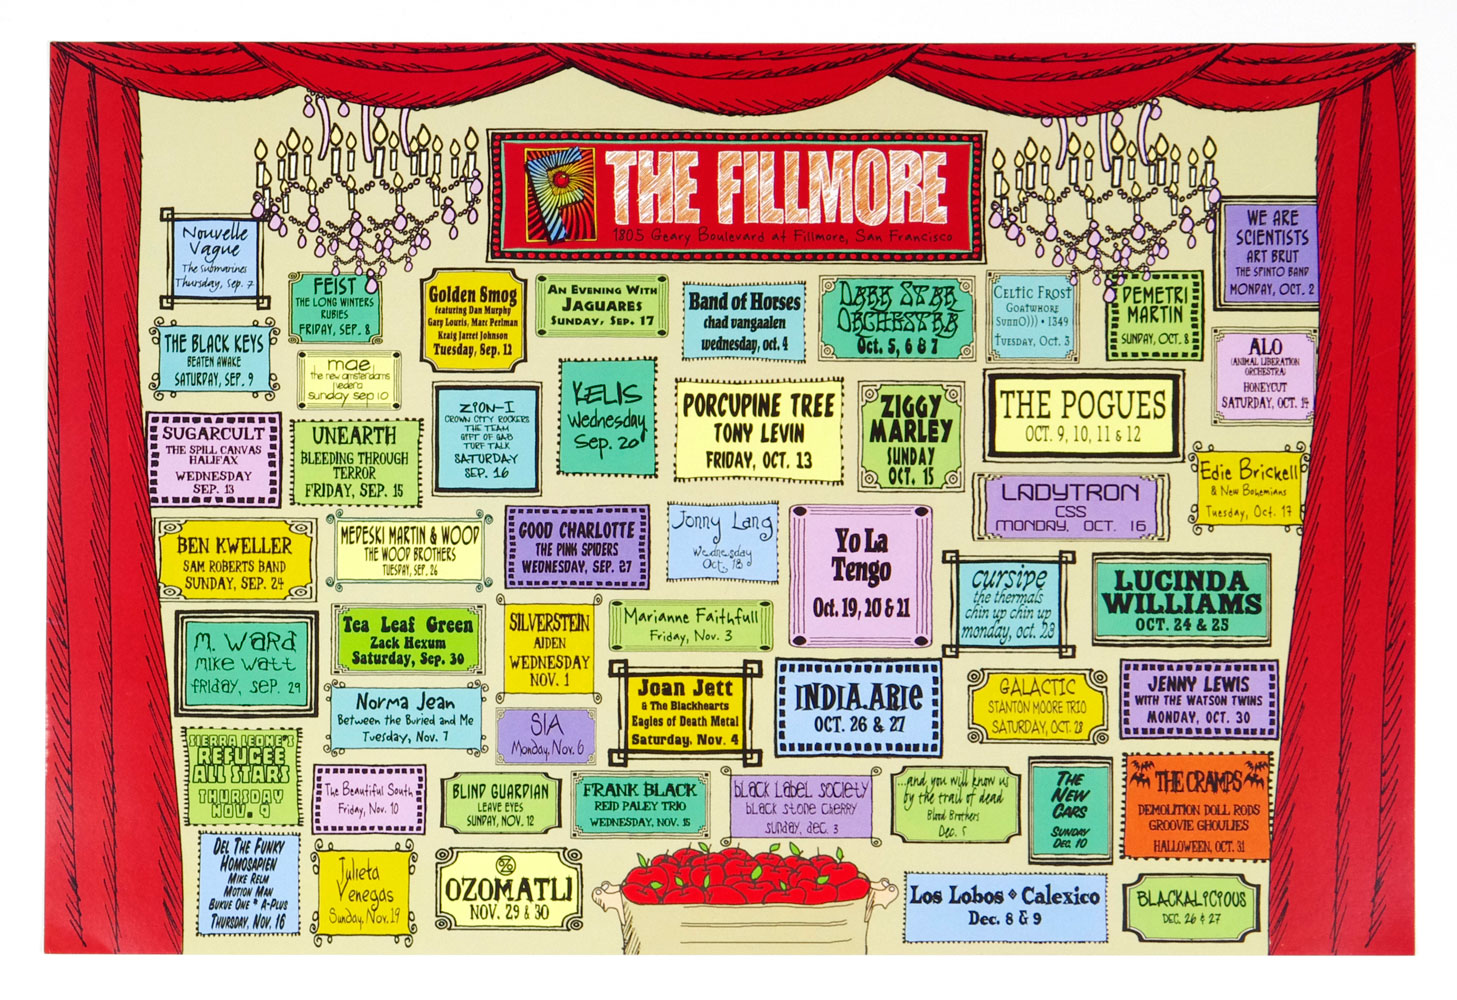 New Fillmore Poster 1996 Oct thru Dec Concert Schedule 